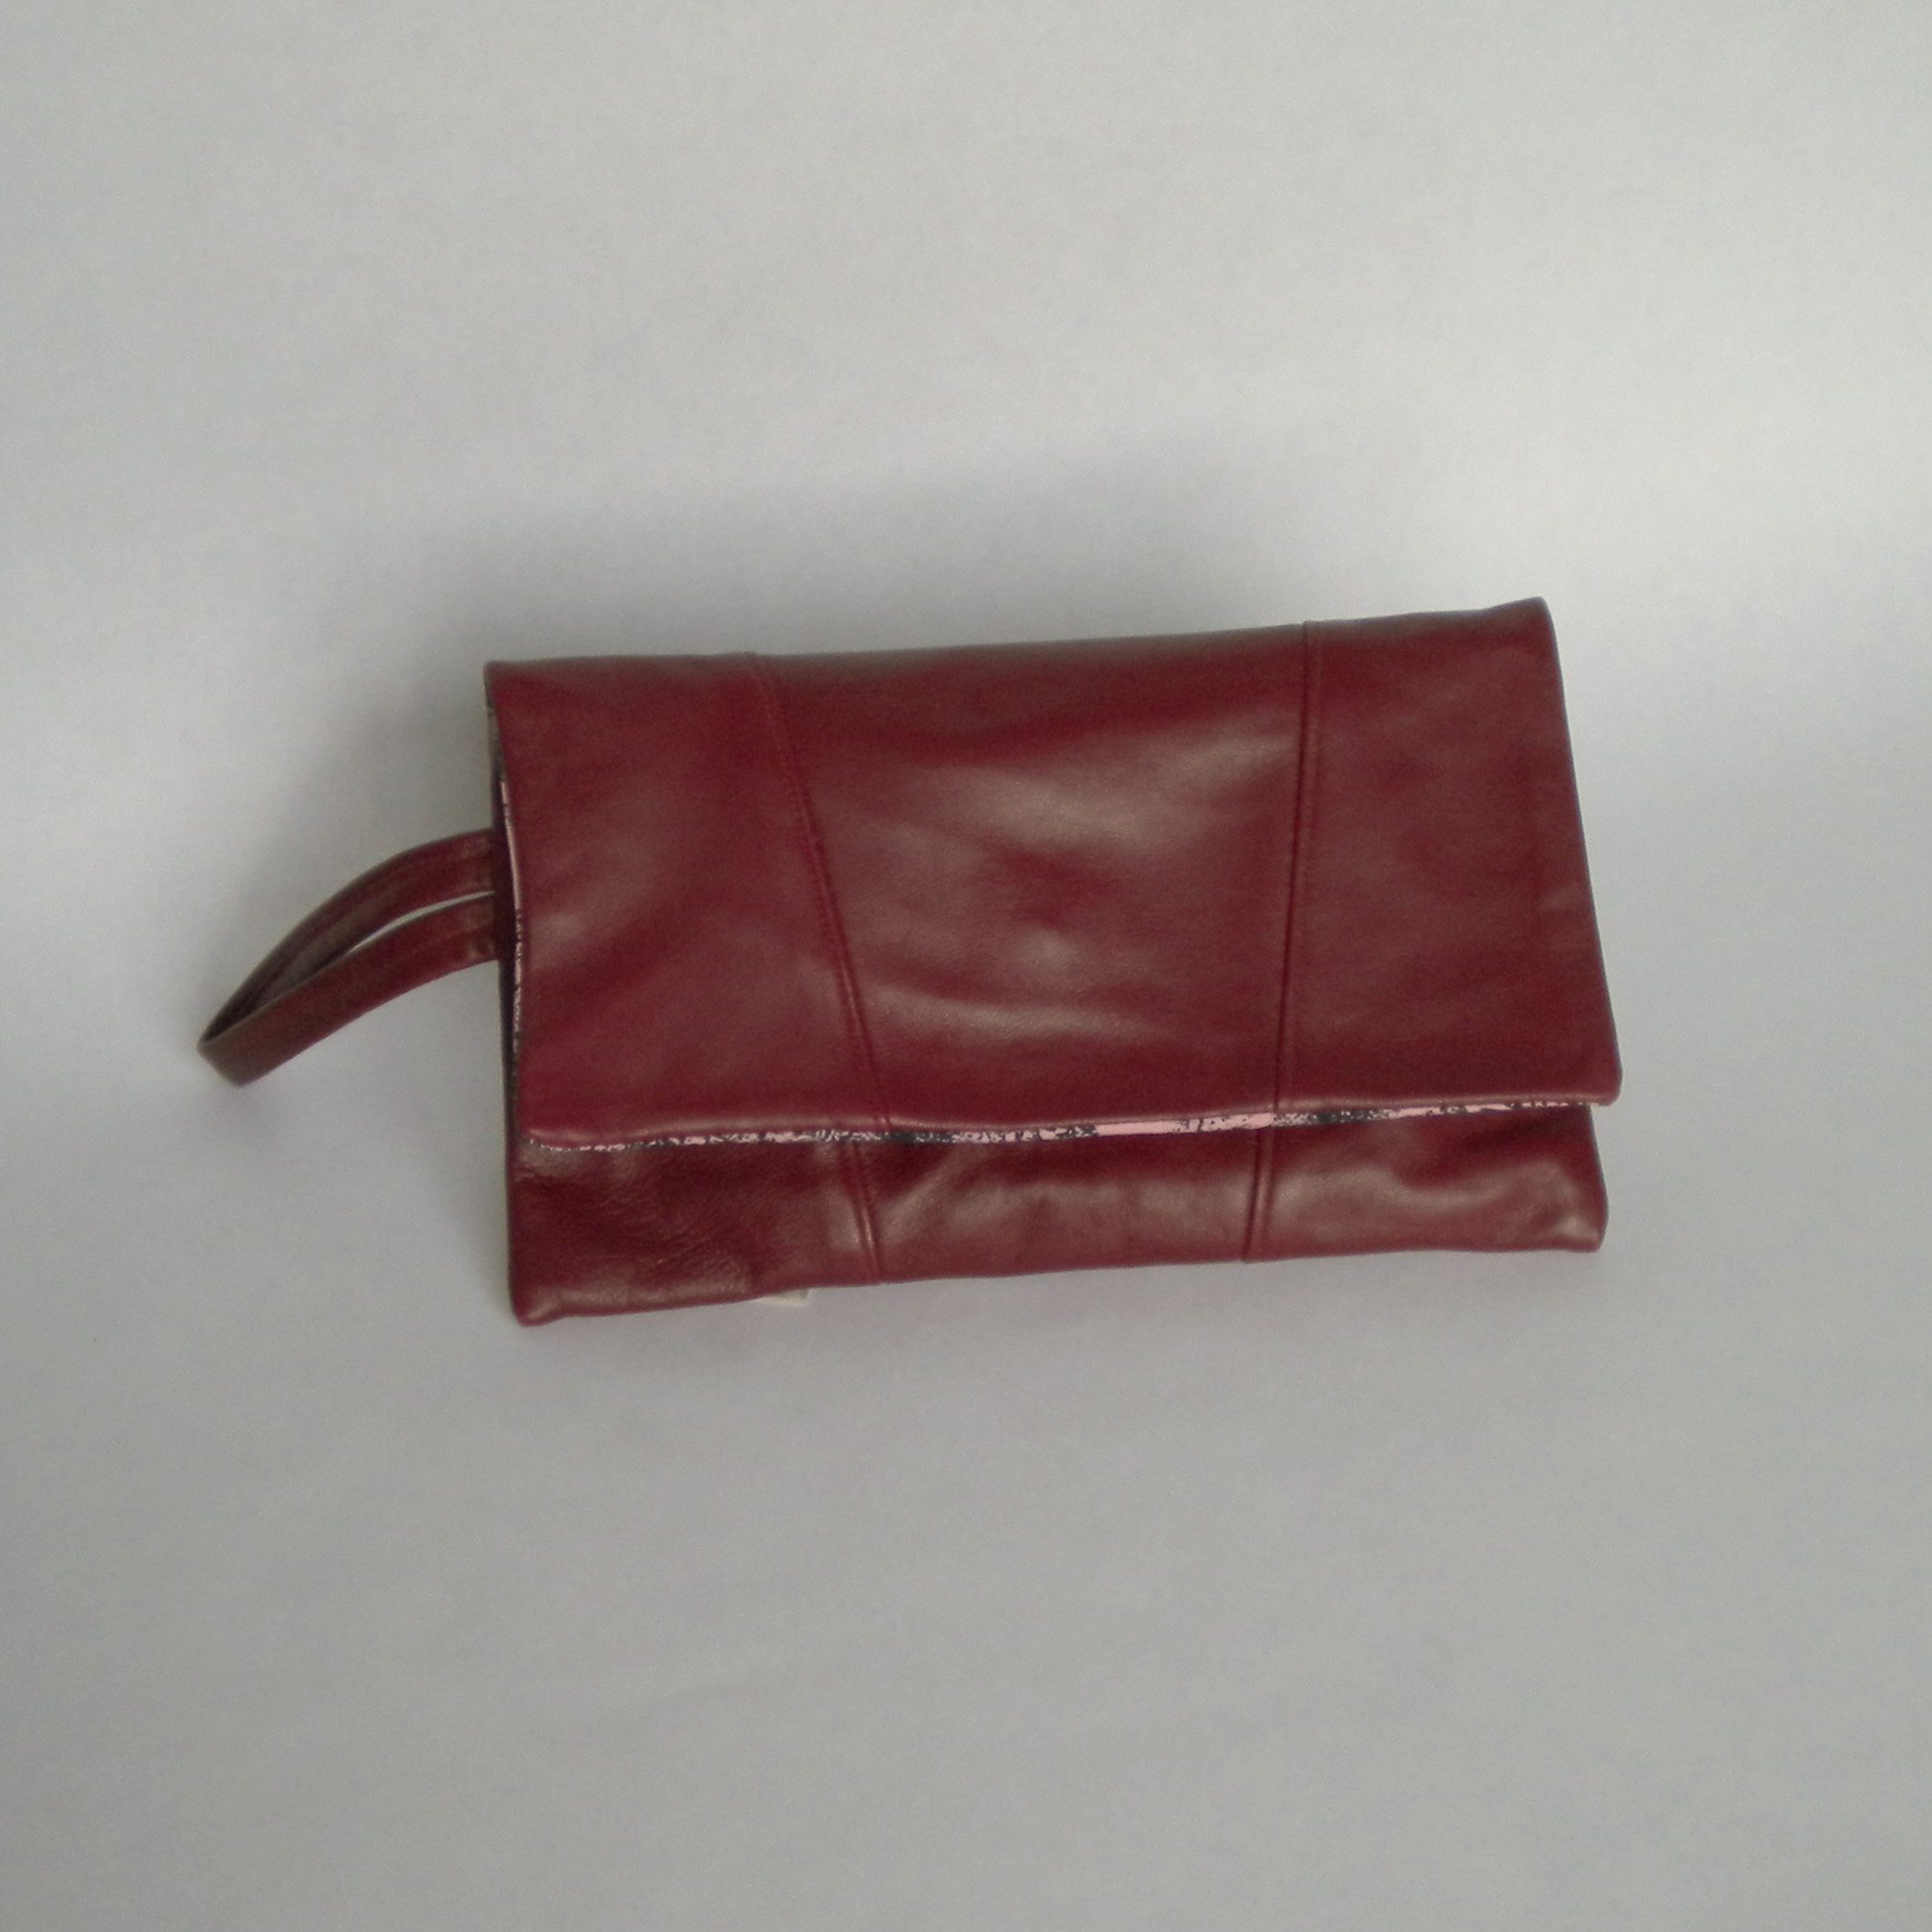  Burgundy leather purse